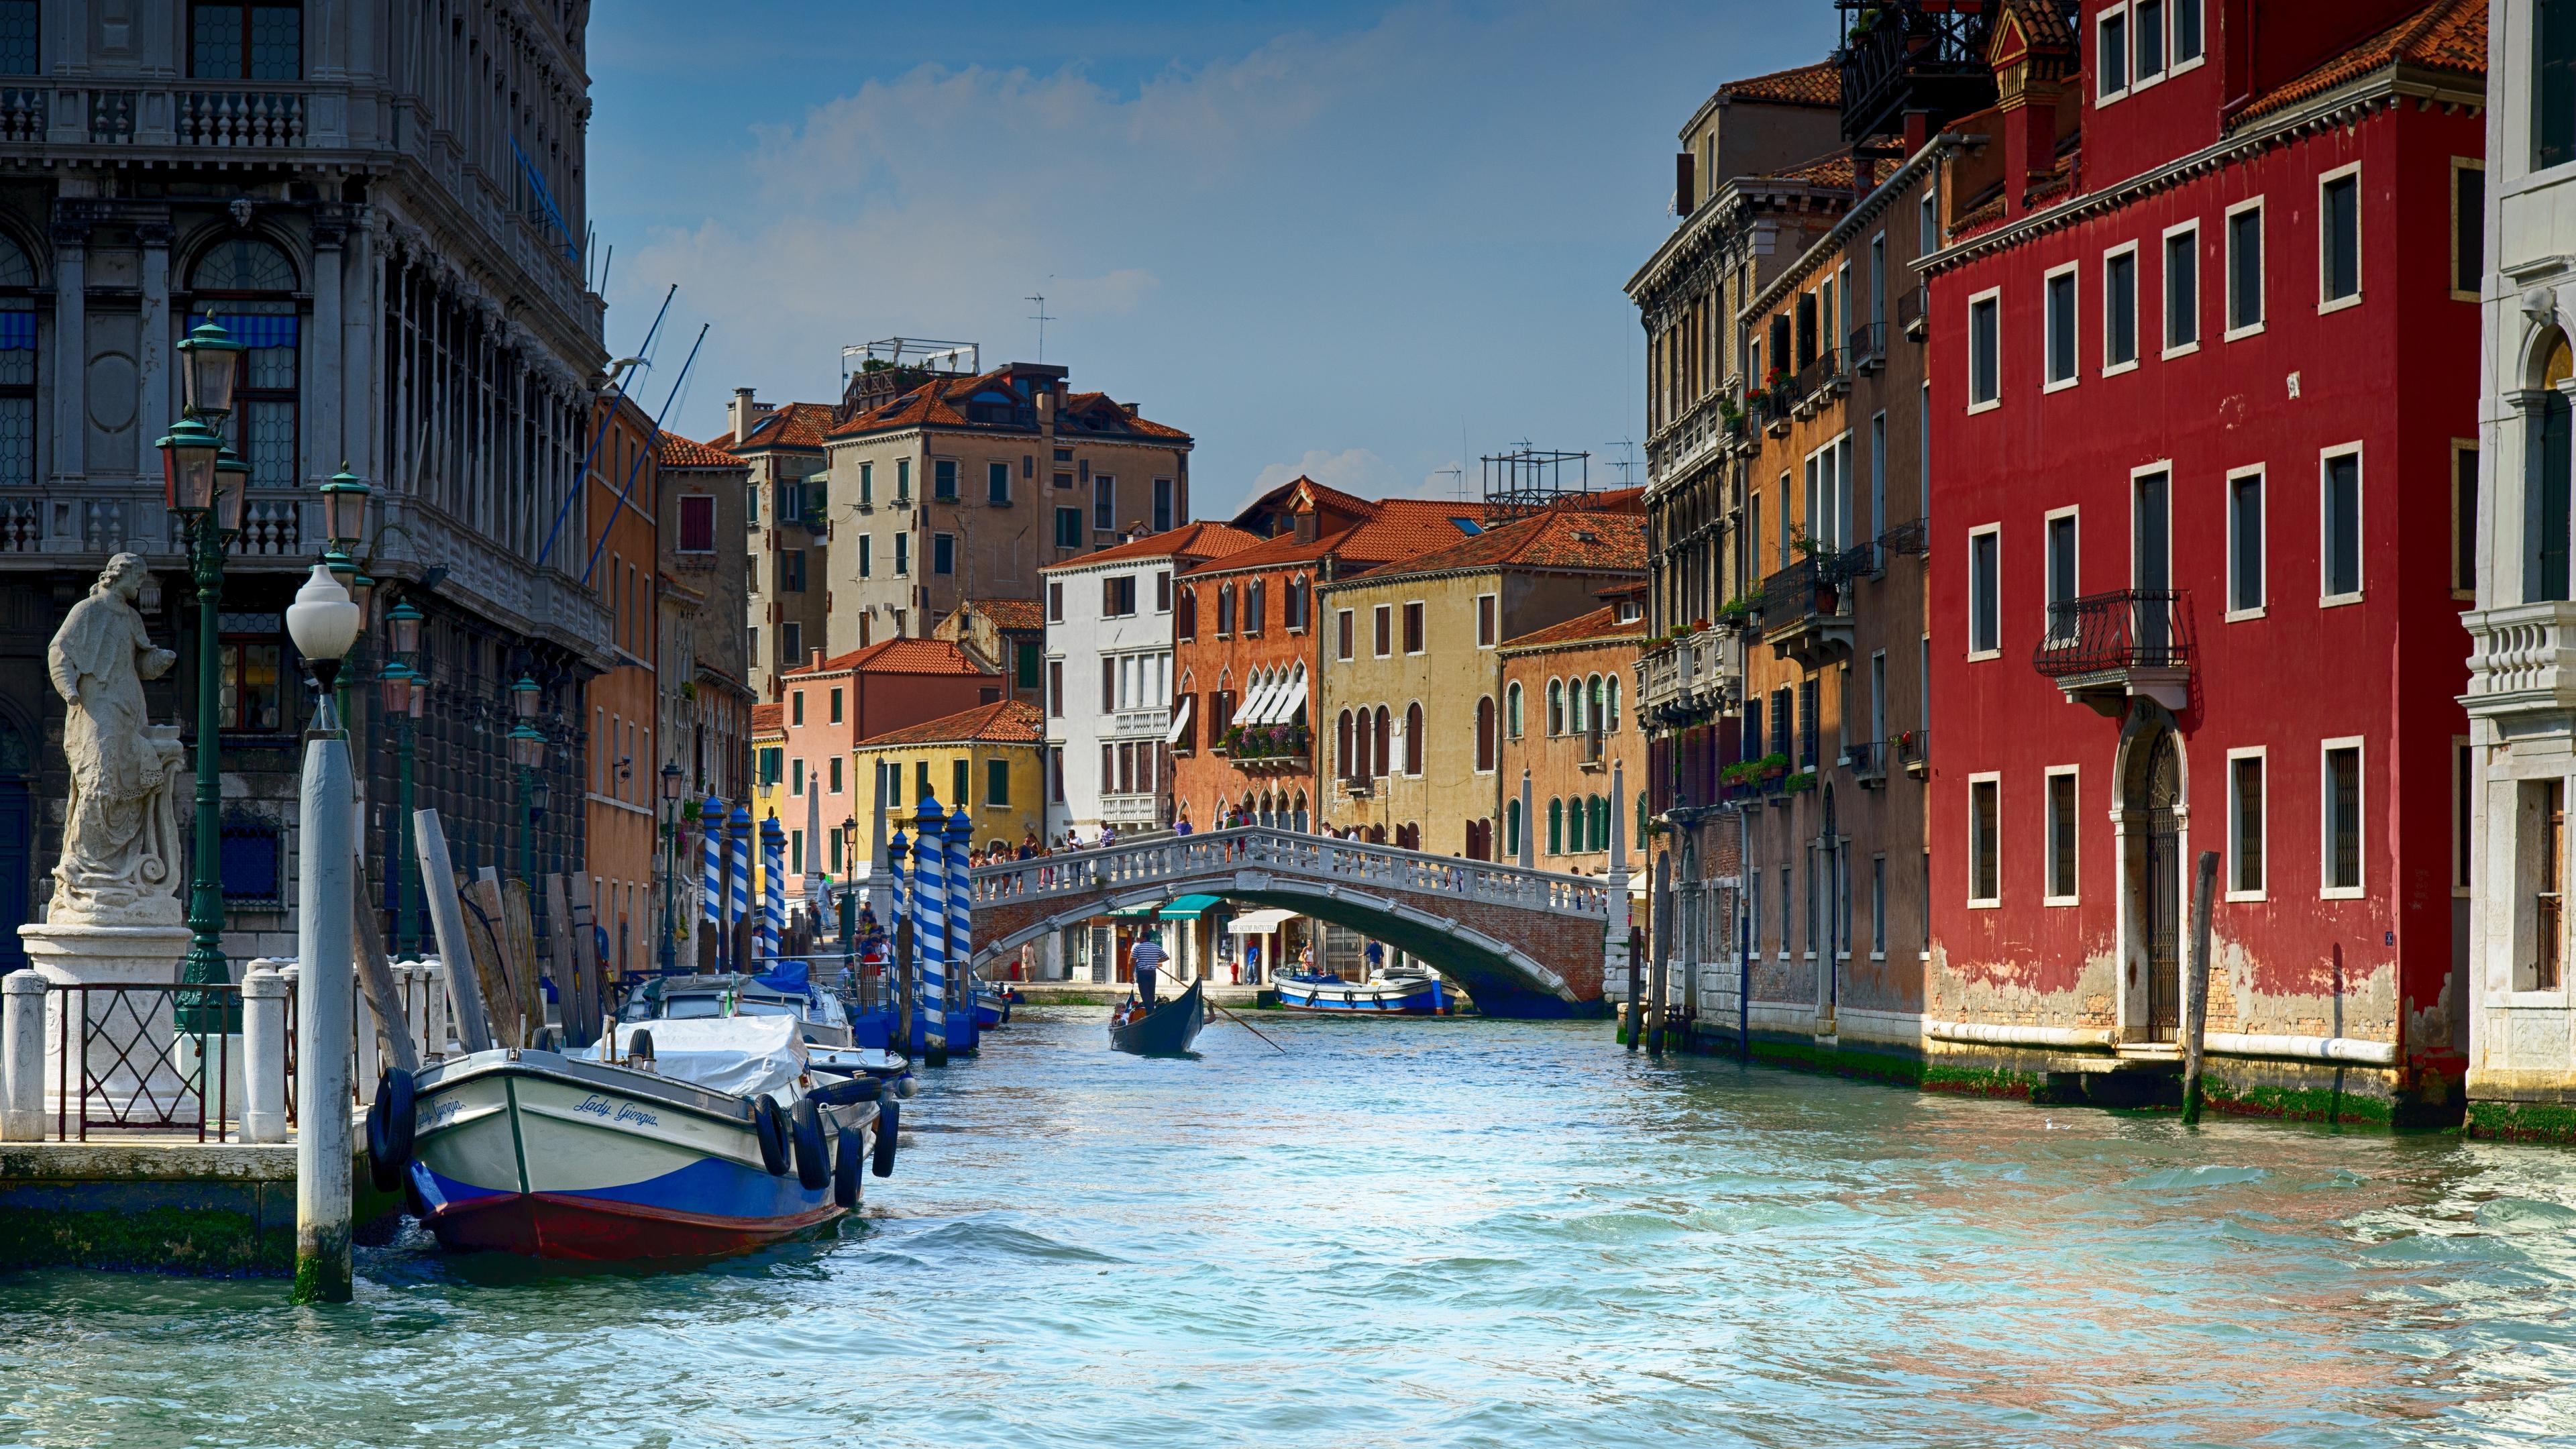 Venice Italy 4K Wallpaper UHD Image. iPhone, PC, iPadk, 1080p